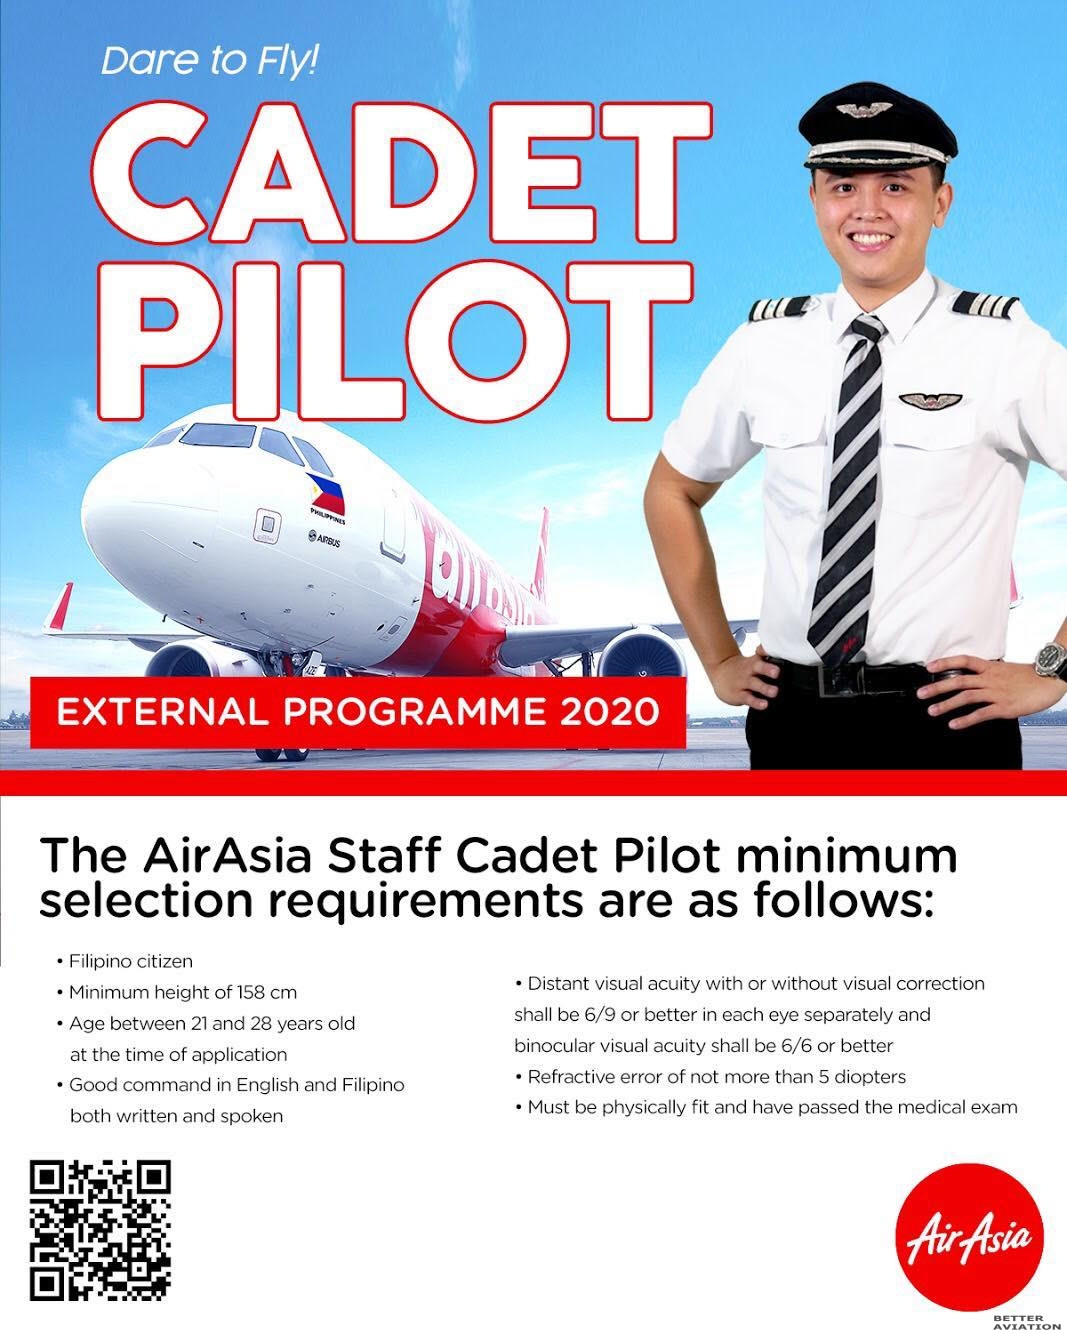 airasia-philippines-allstars-cadet-pilot-2020-better-aviation